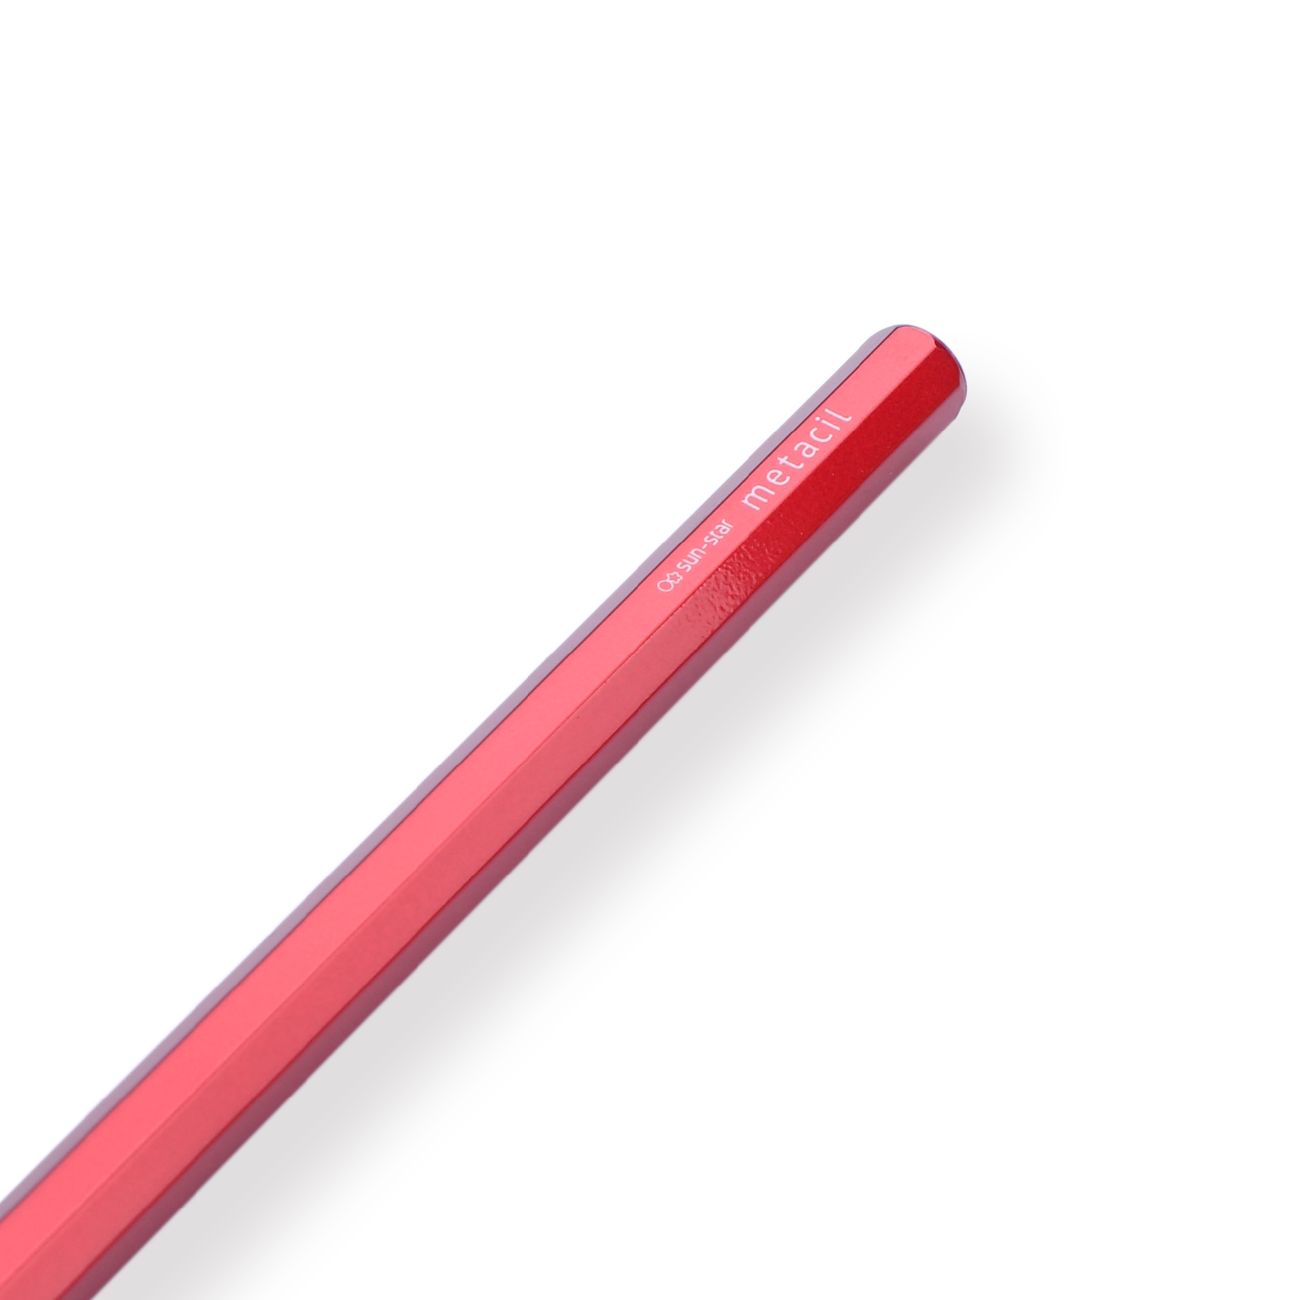 Sun-Star Metacil Metal Pencil - Metallic Red — Stationery Pal